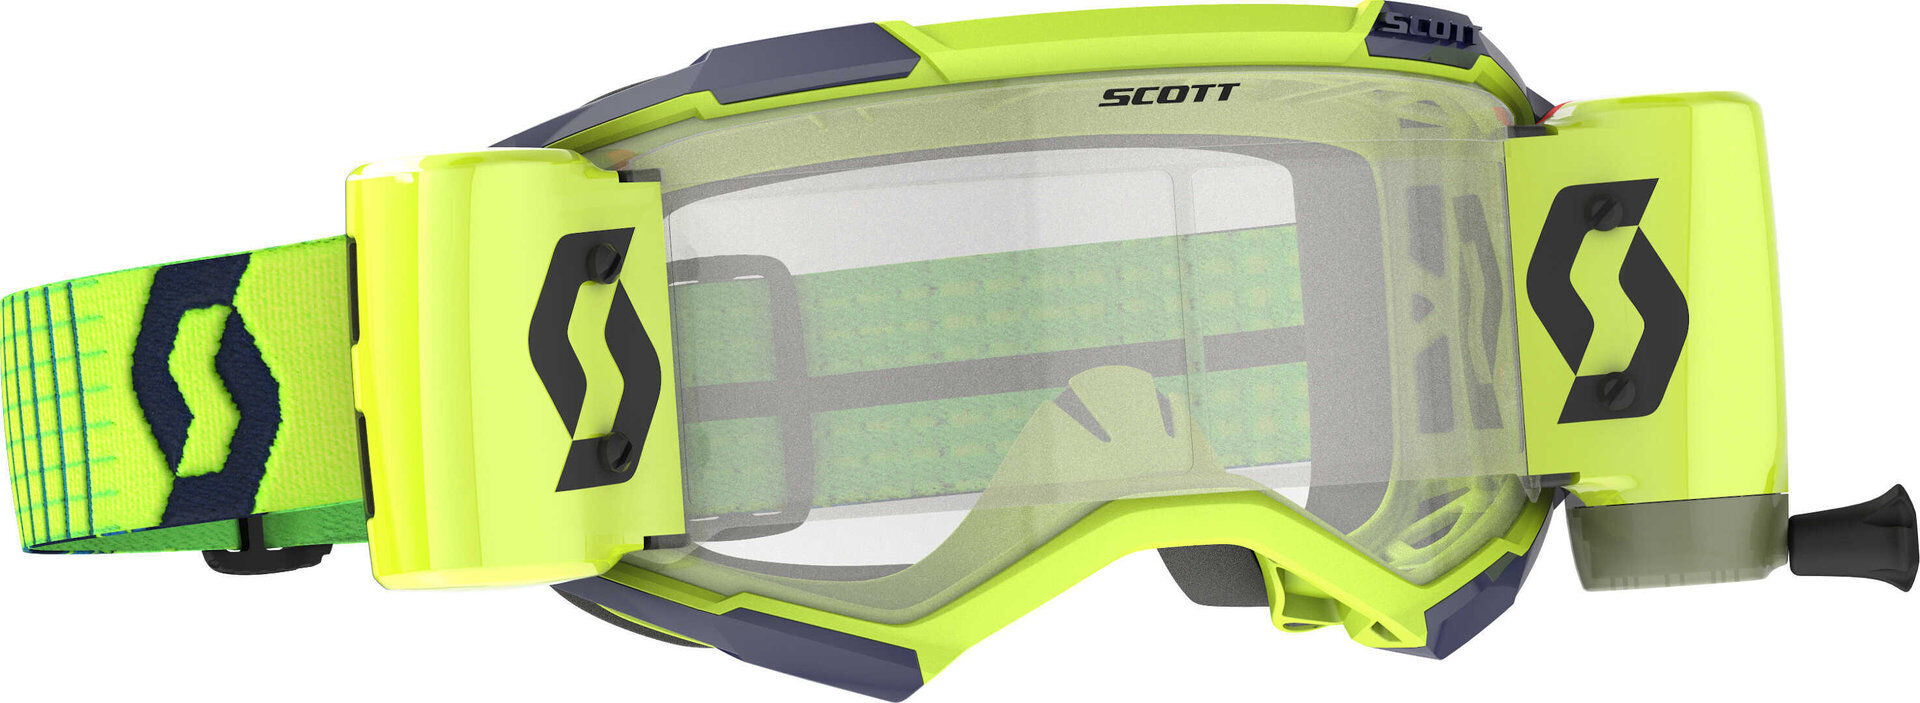 Scott Fury WFS gafas azul/amarillas de Motocross